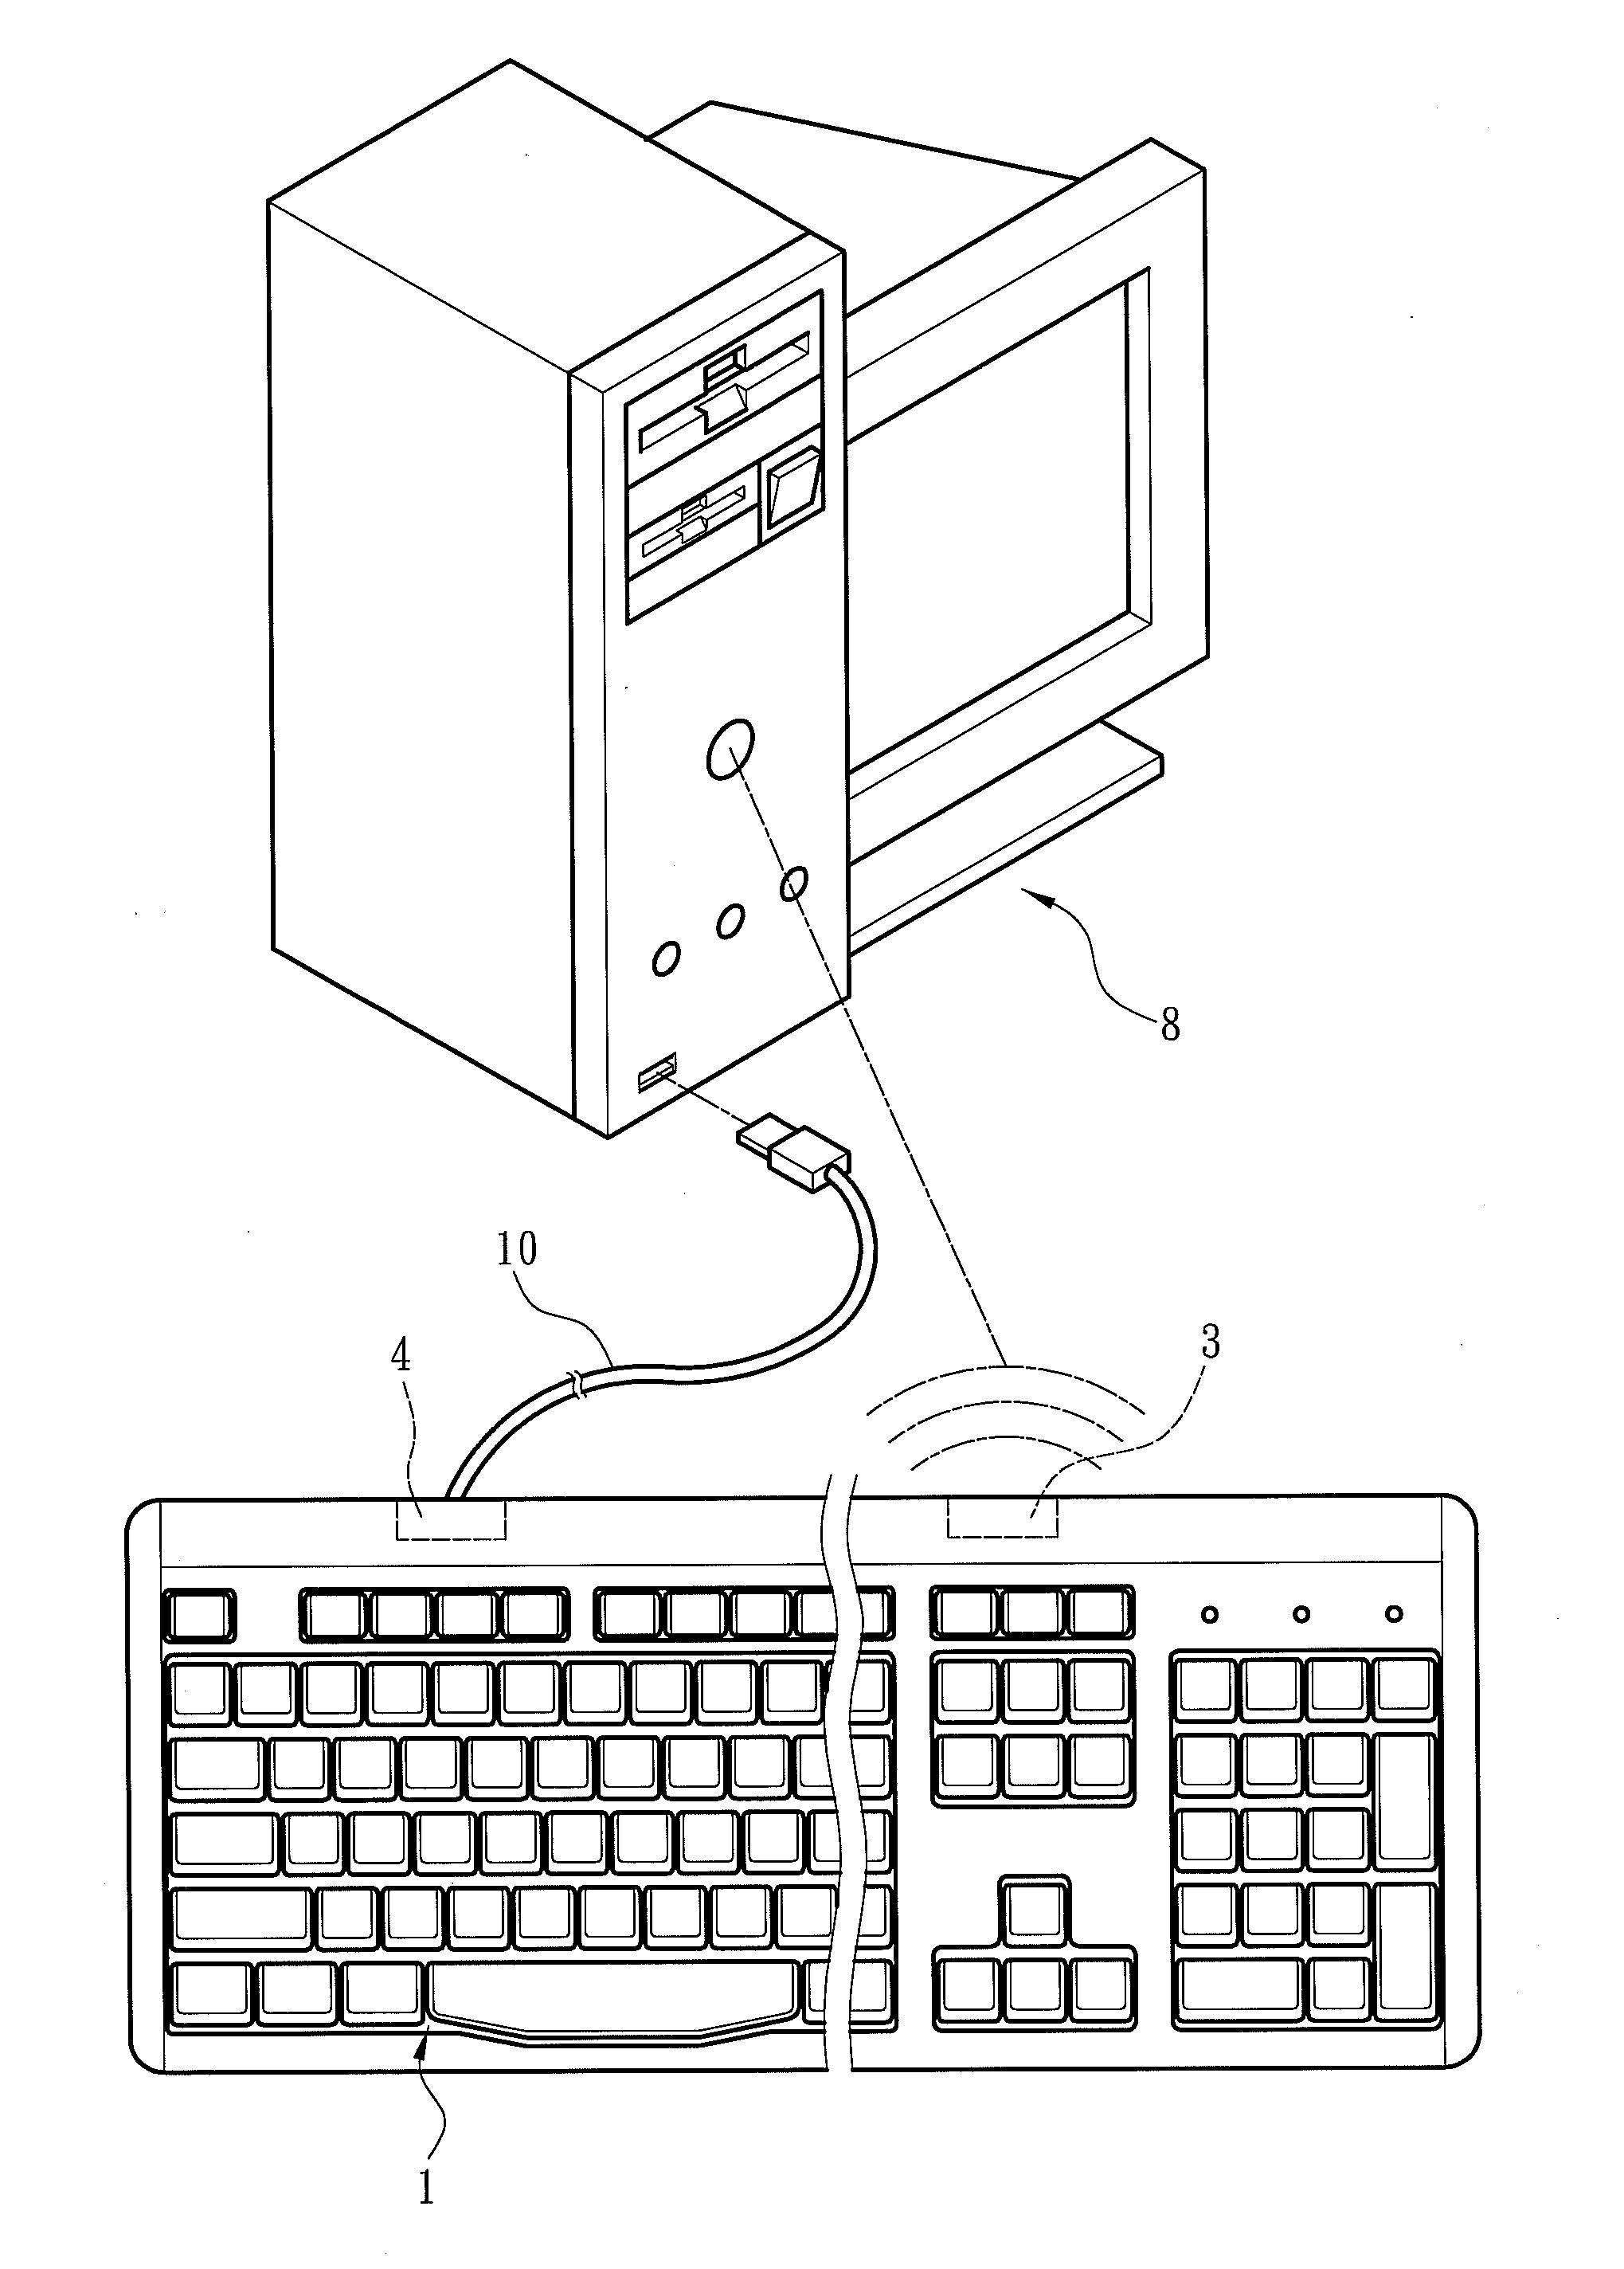 Keyboard providing self-detection of linkage